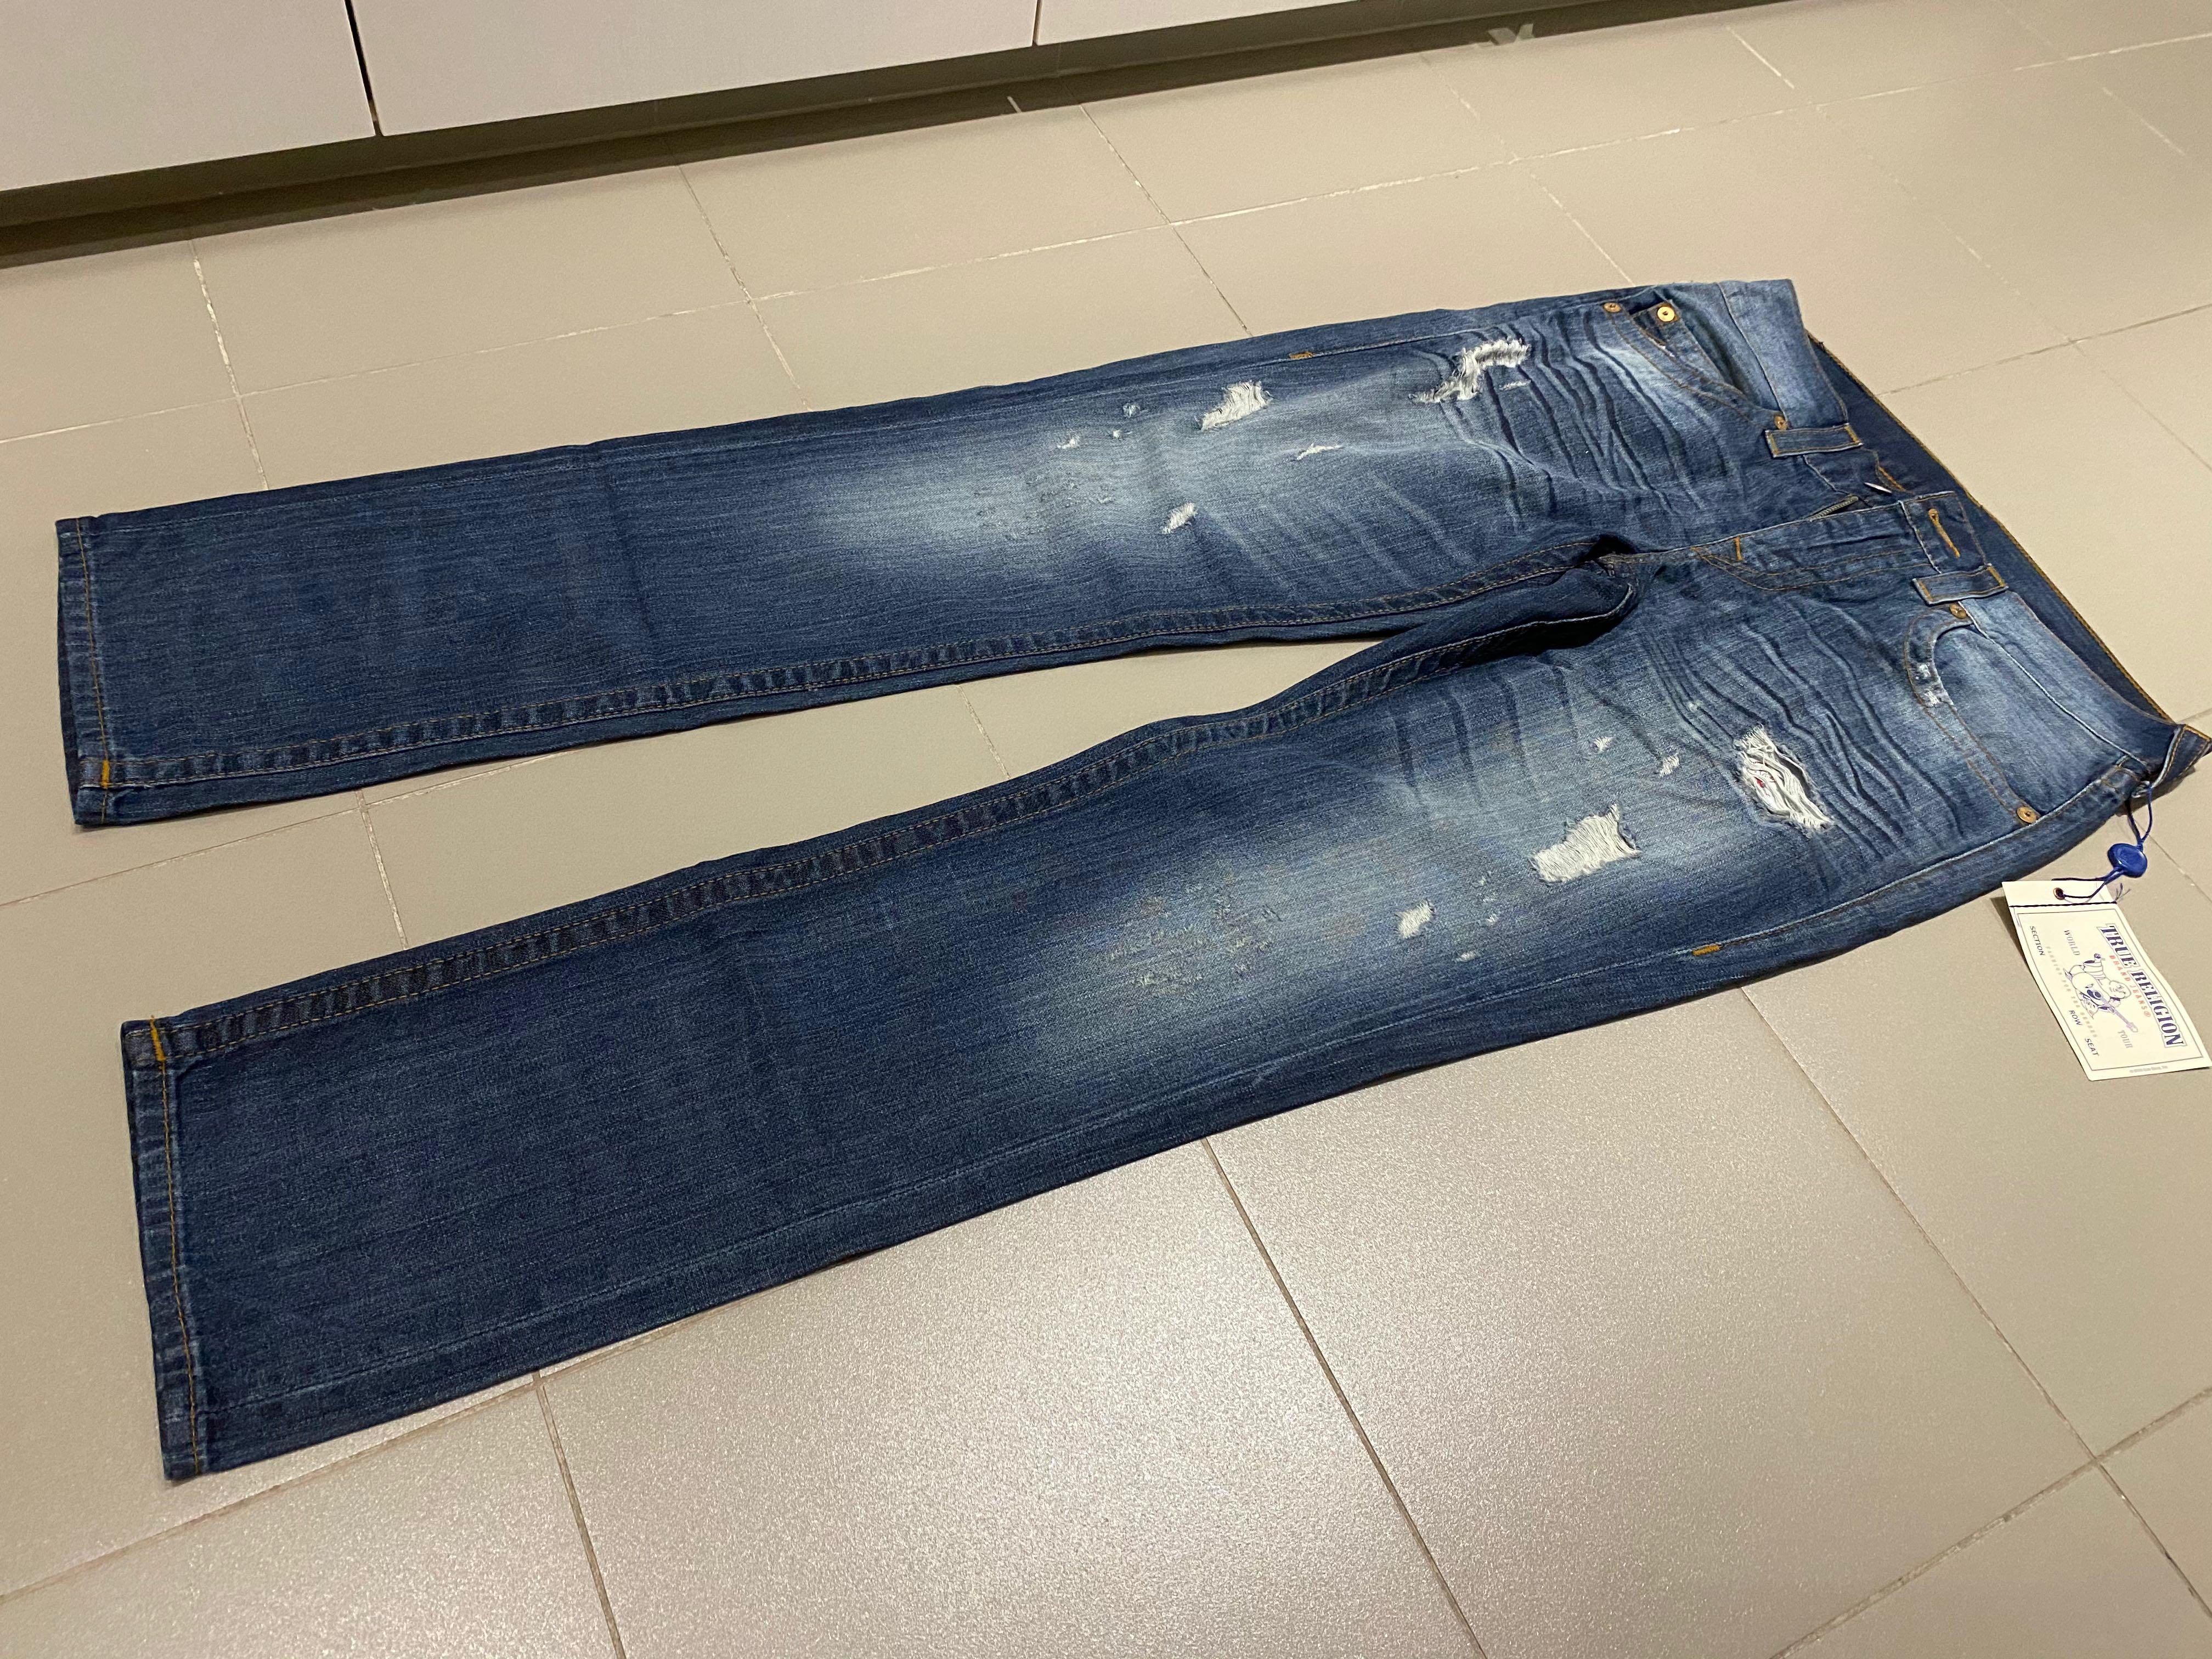 true religion jeans size 32